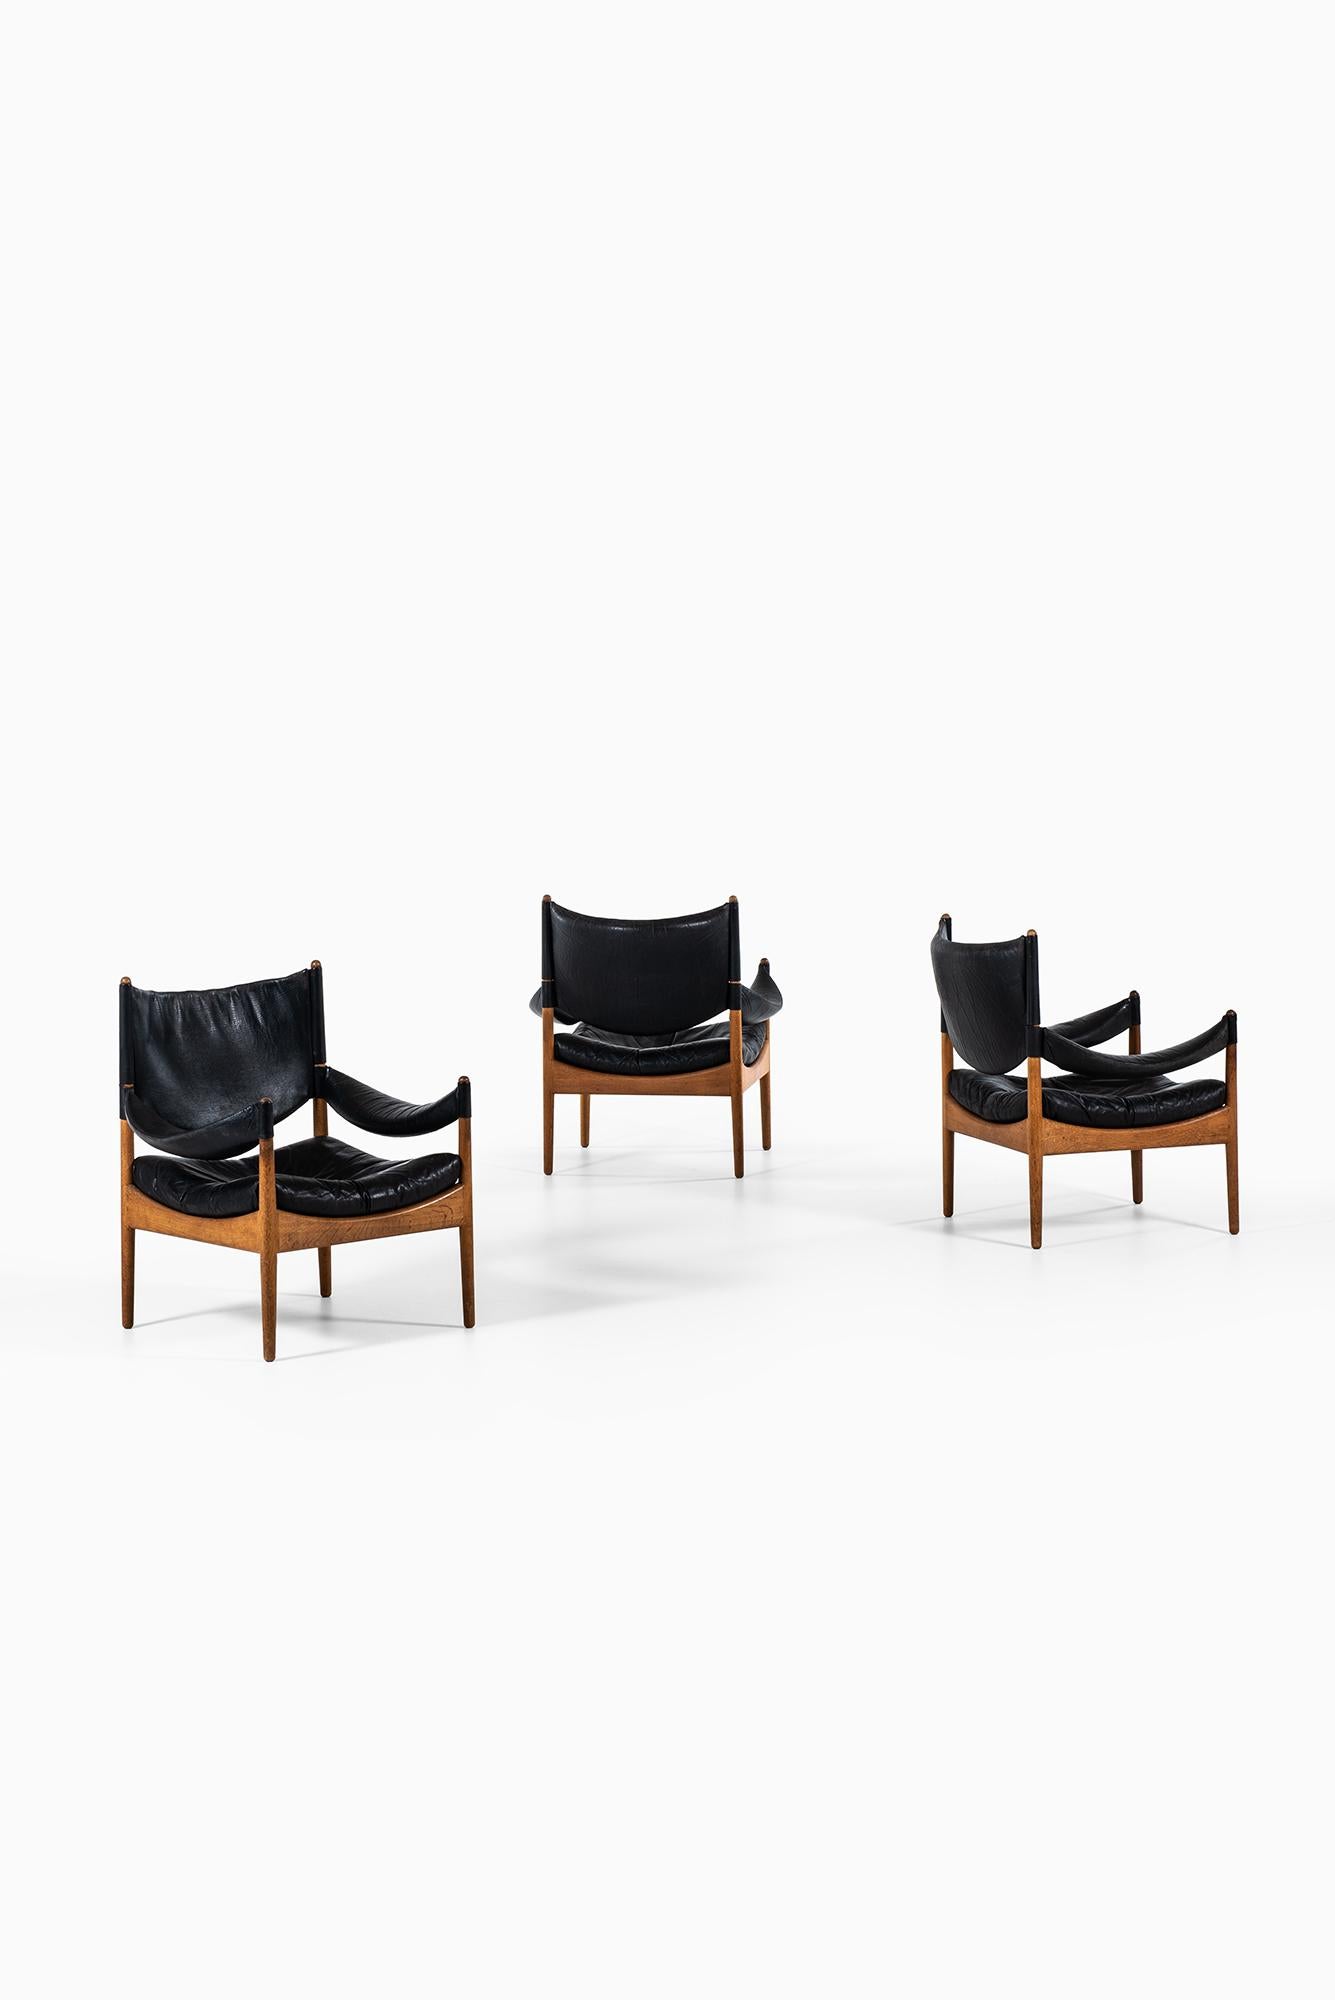 Rare easy chair model Modus designed by Kristian Solmer Vedel. Produced by Søren Willadsen møbelfabrik in Denmark.